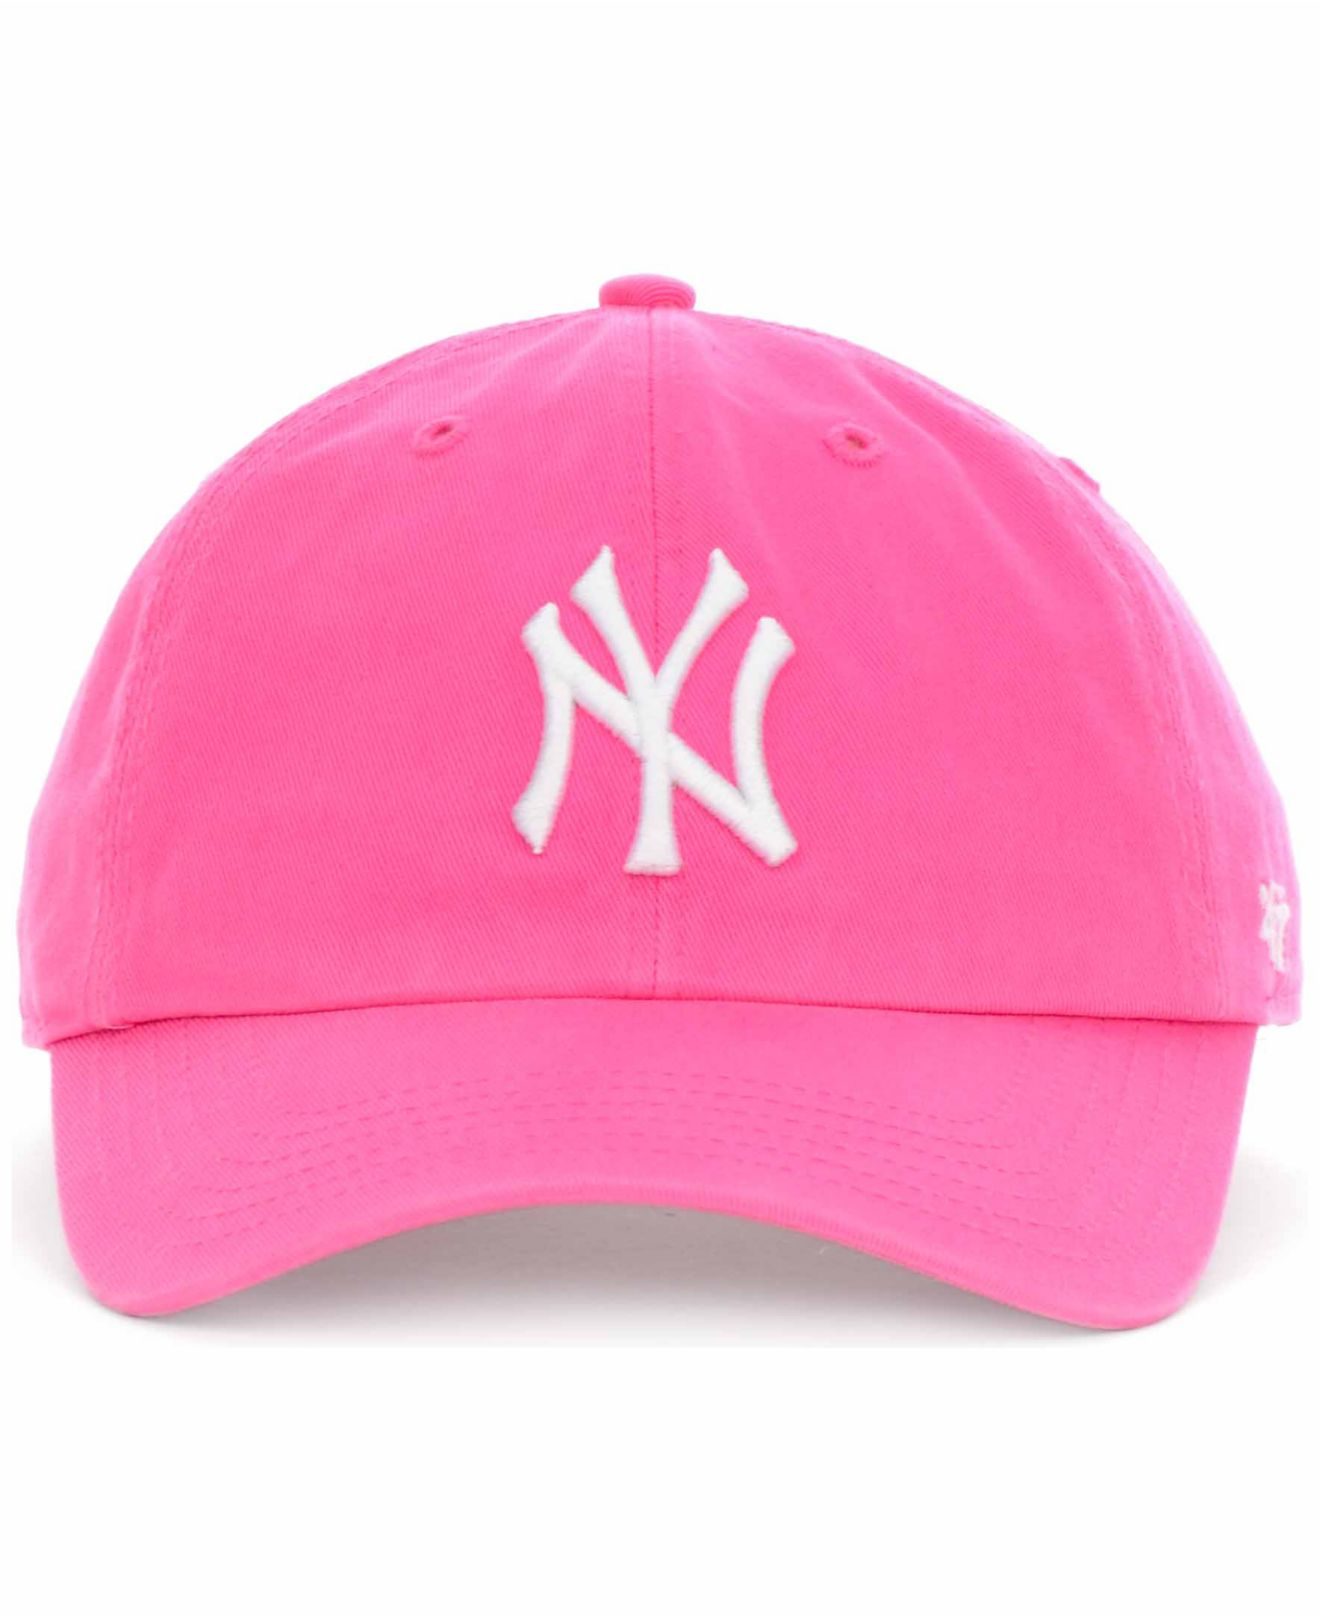 Yankees womens baseball cap w with woven fabric